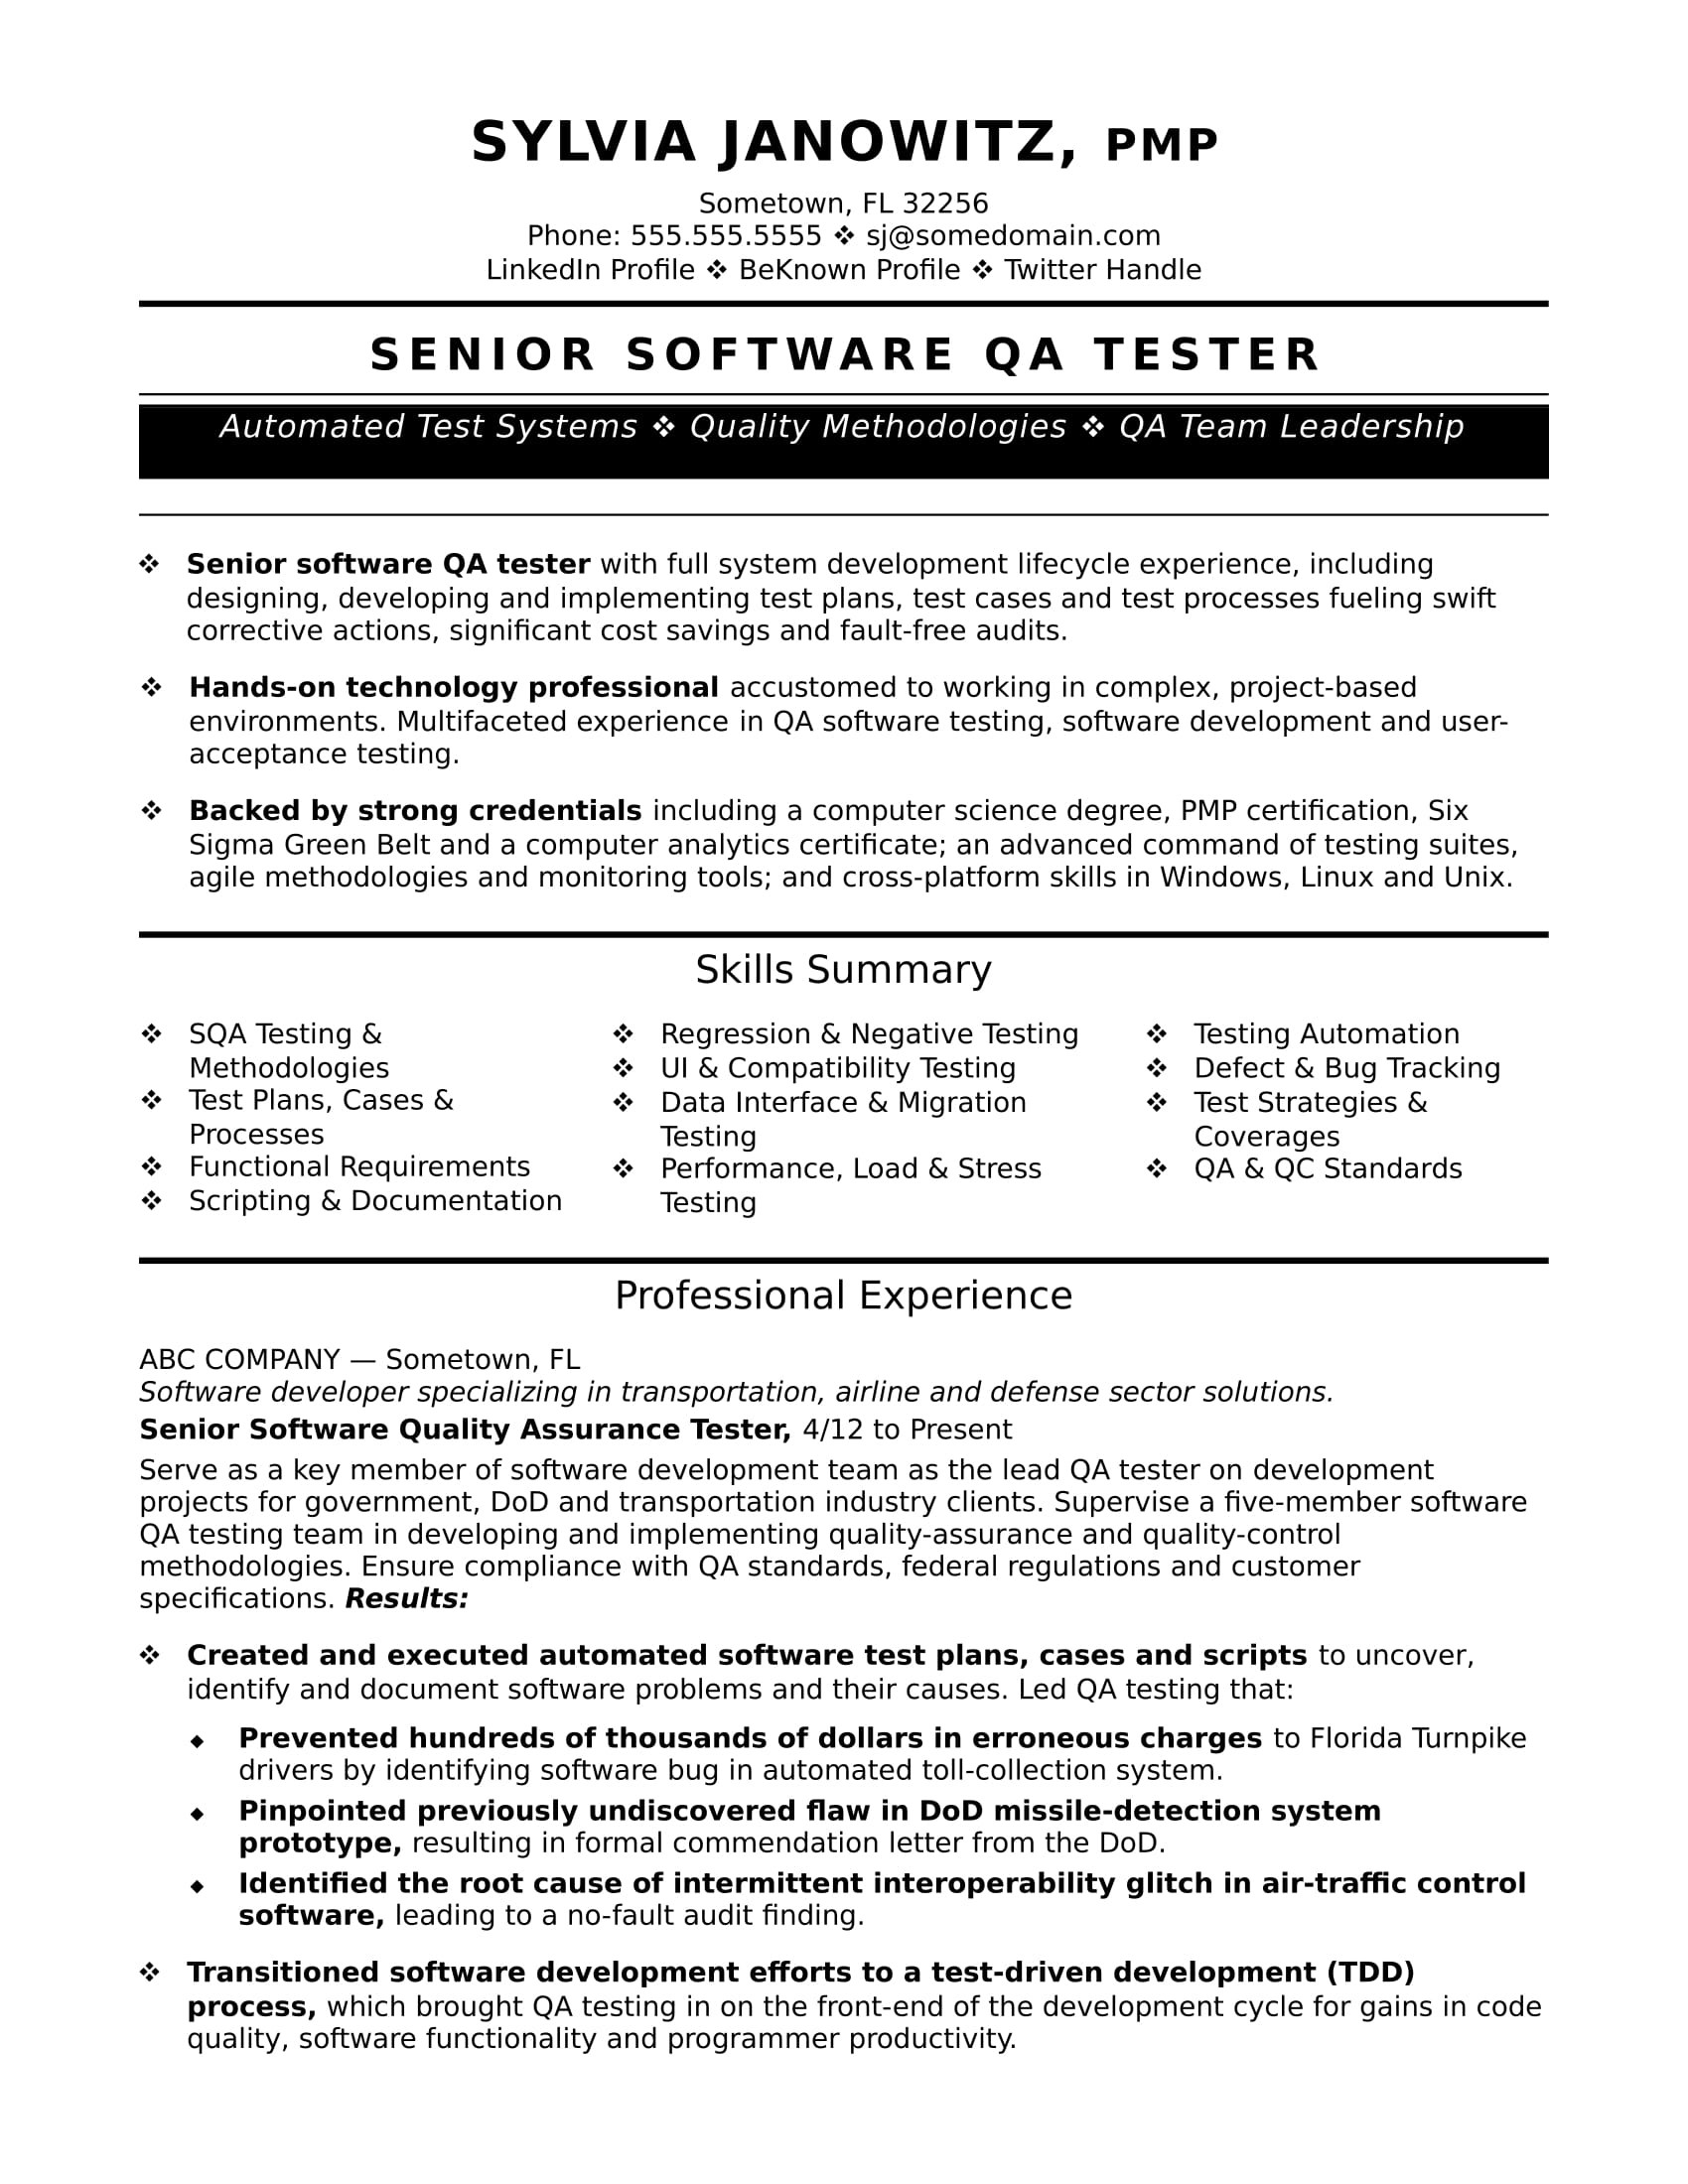 Software Engineer In Test Sample Resume Experienced Qa software Tester Resume Sample Monster.com